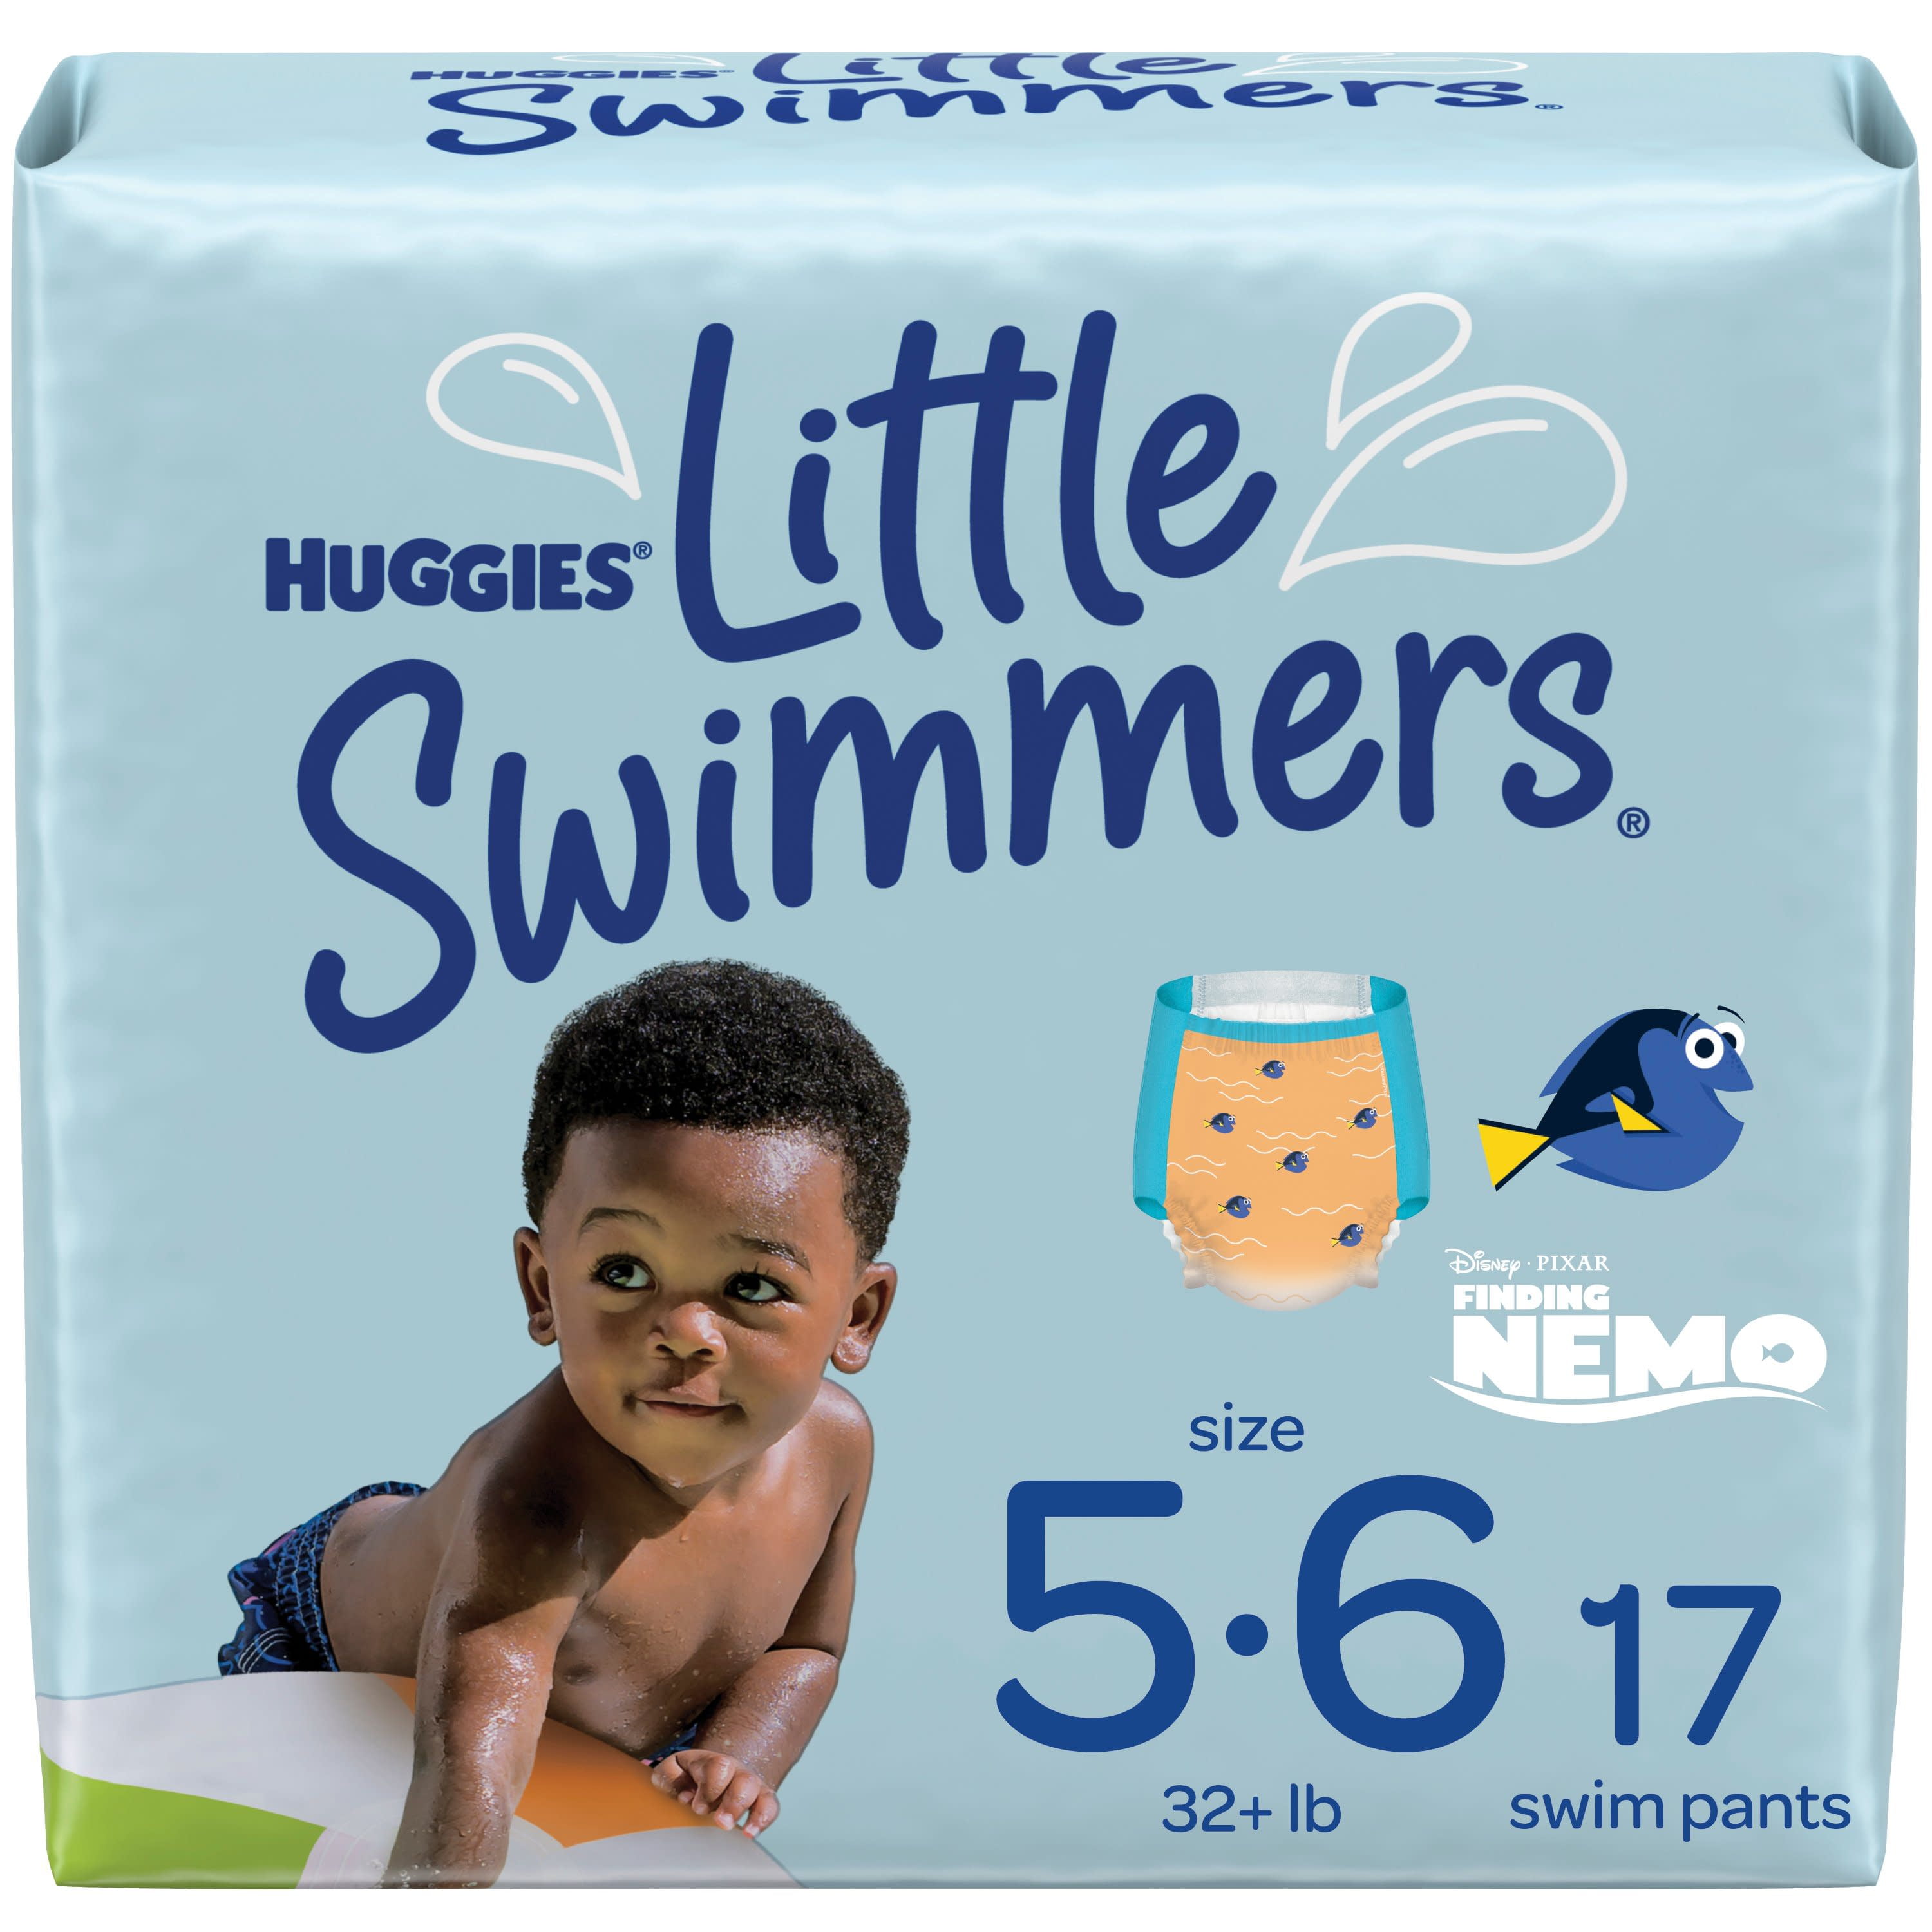 huggies little swimmer 5-6